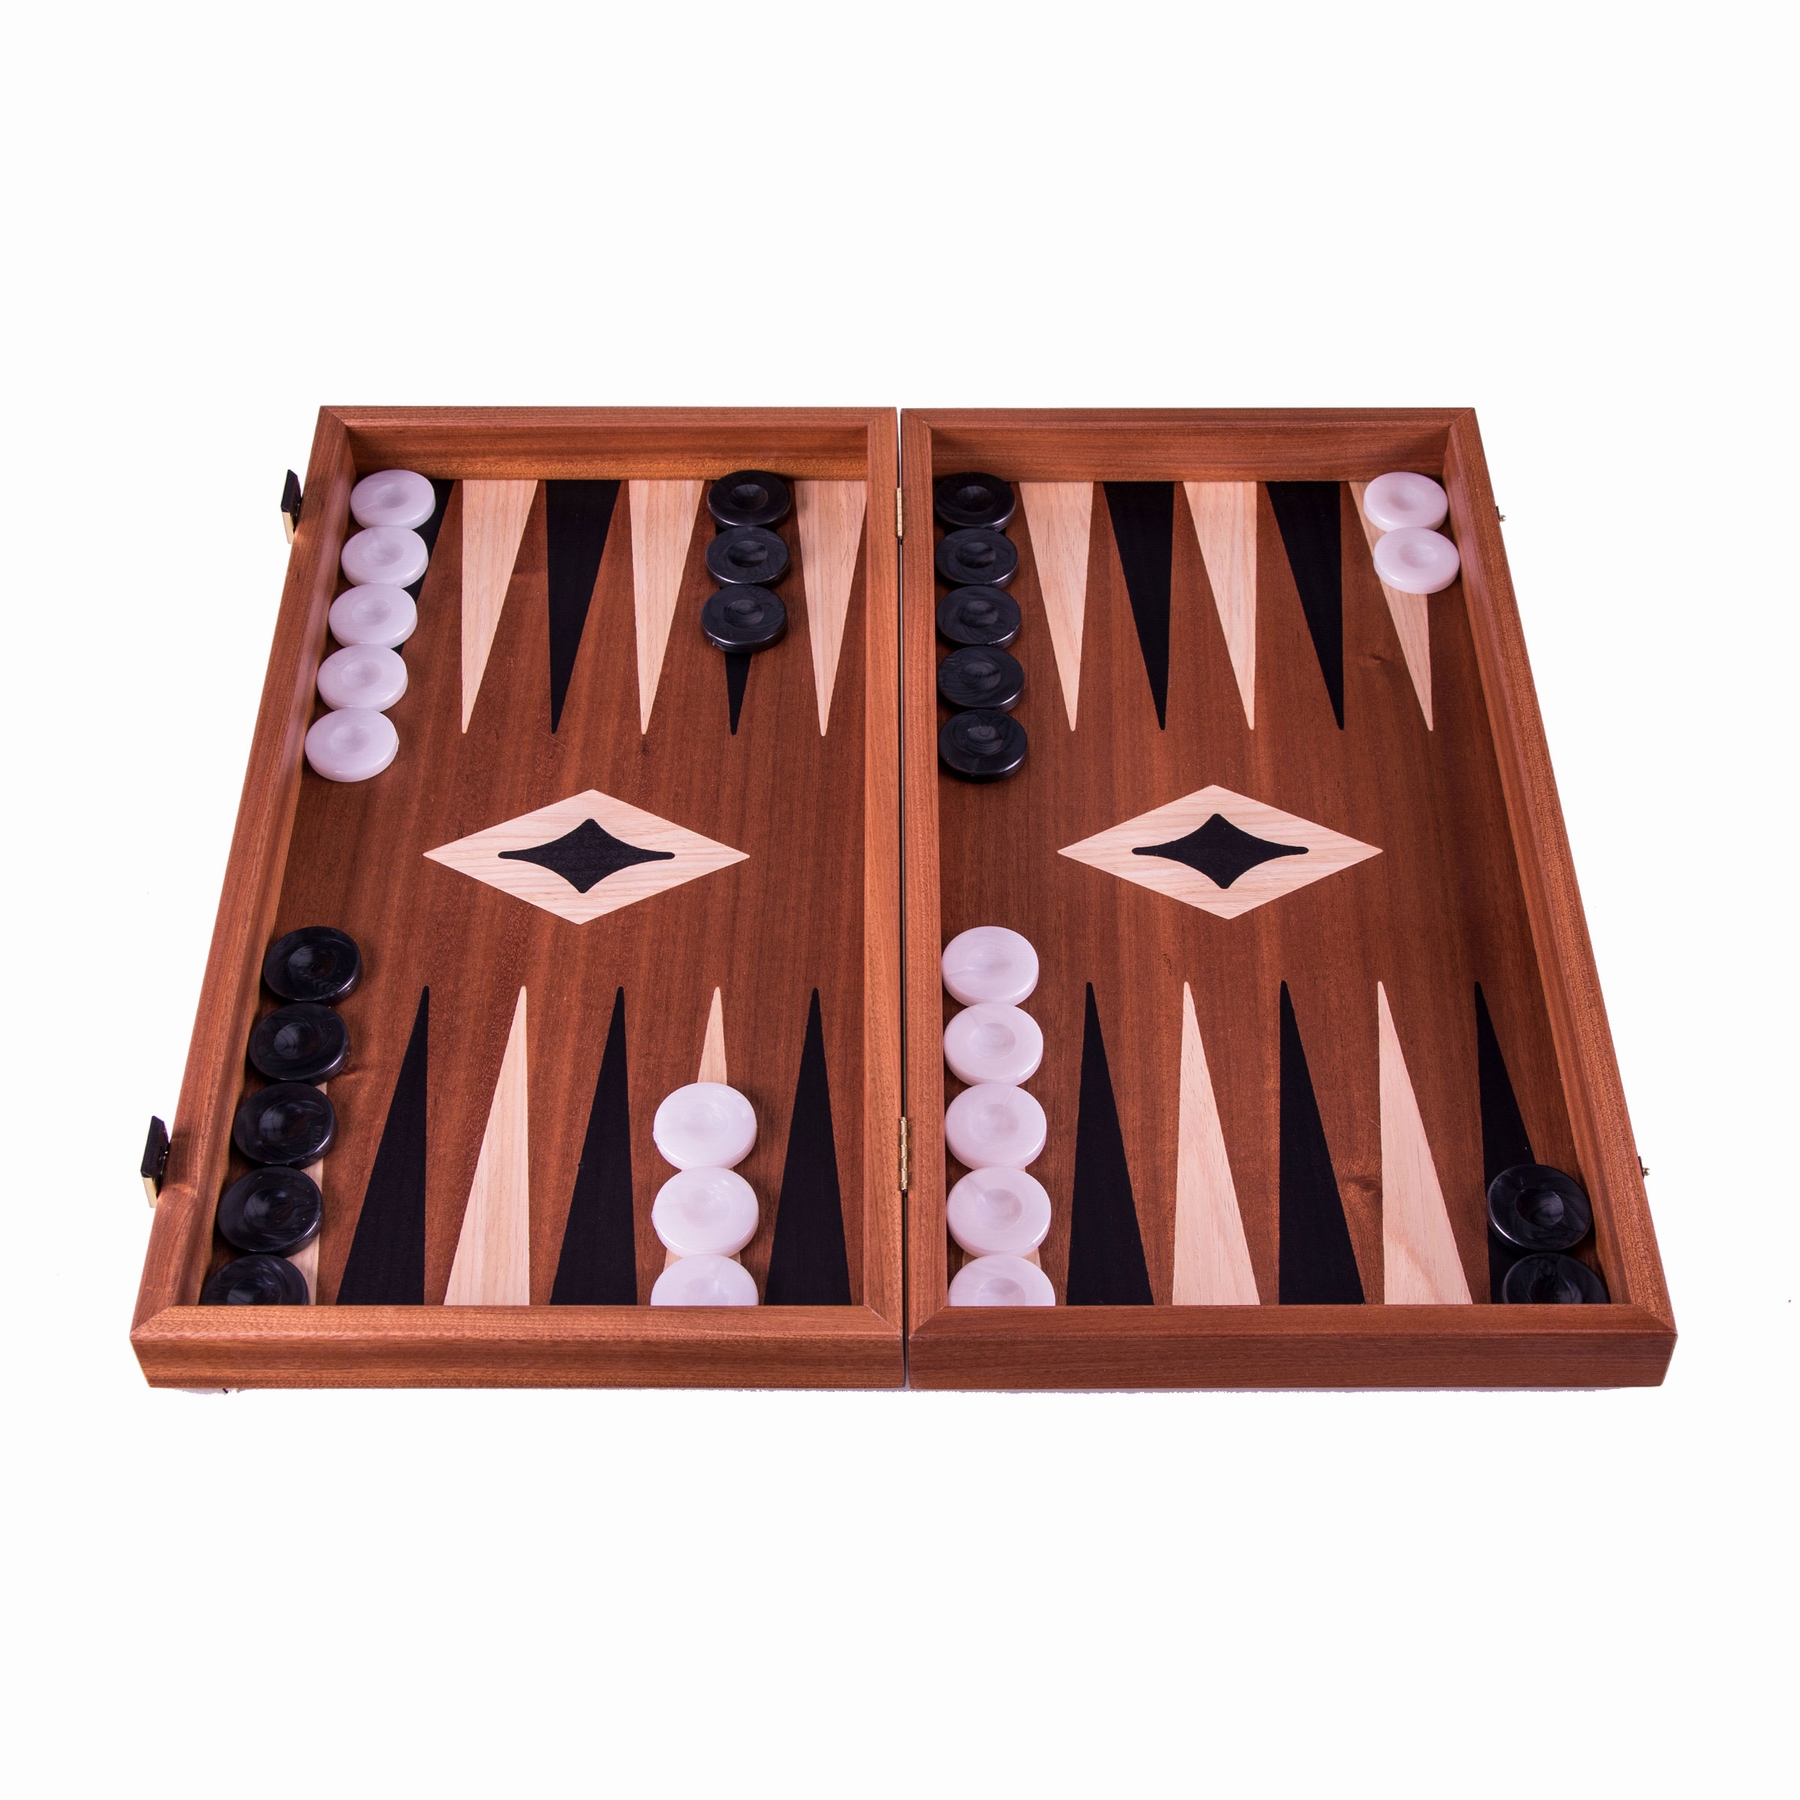 Echecs backgammon 38cm acaj hc